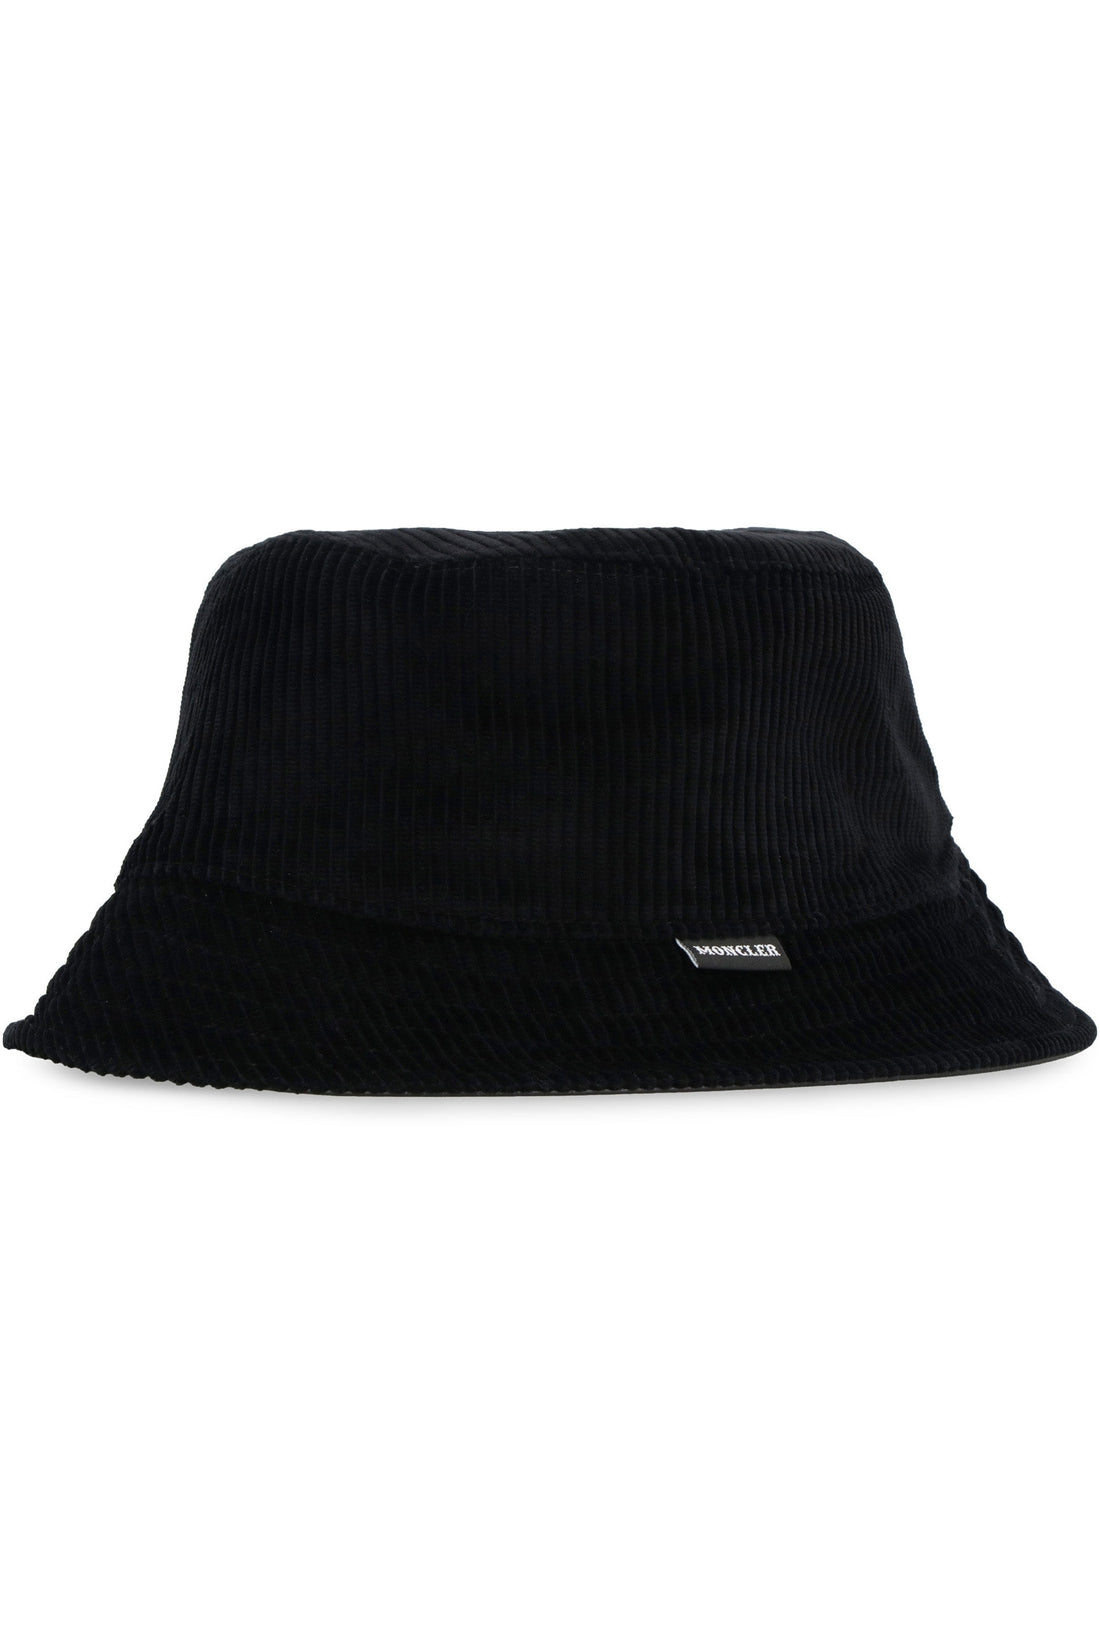 Moncler Genius-OUTLET-SALE-7 Moncler FRGMT Hiroshi Fujuwara - Reversible bucket hat-ARCHIVIST